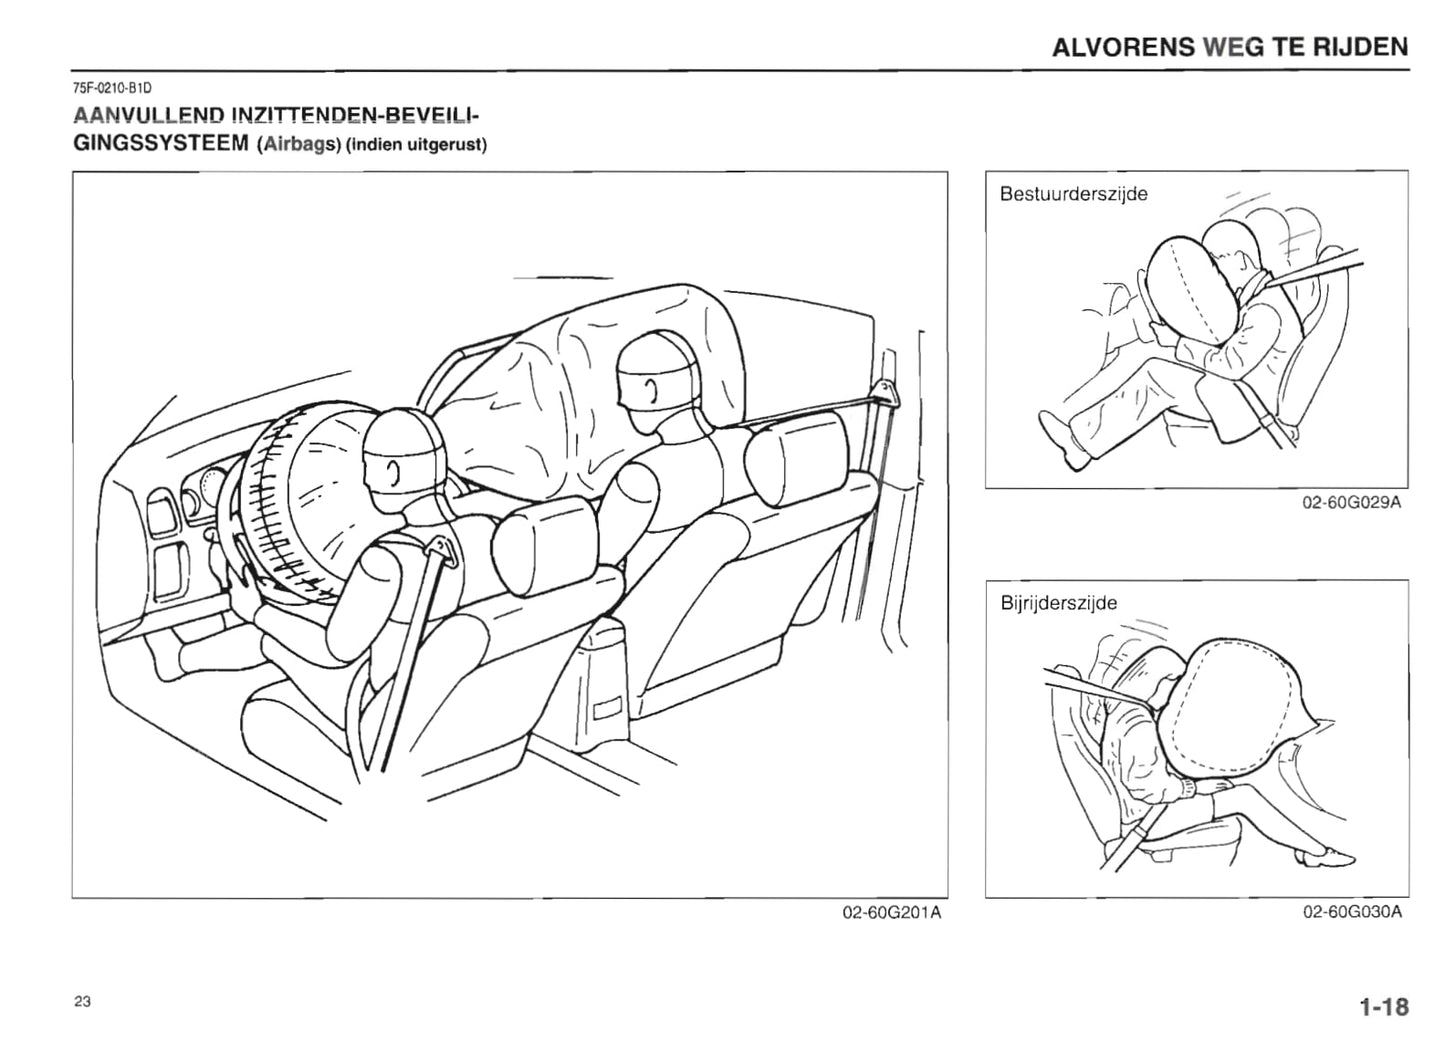 1997-2000 Suzuki Wagon R+ Owner's Manual | Dutch